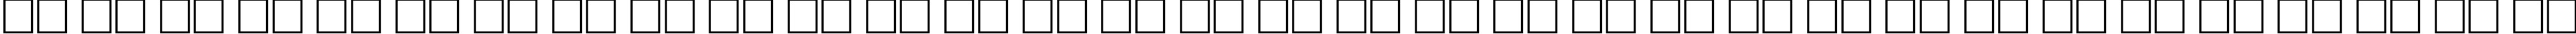 Пример написания русского алфавита шрифтом Aardvark70n